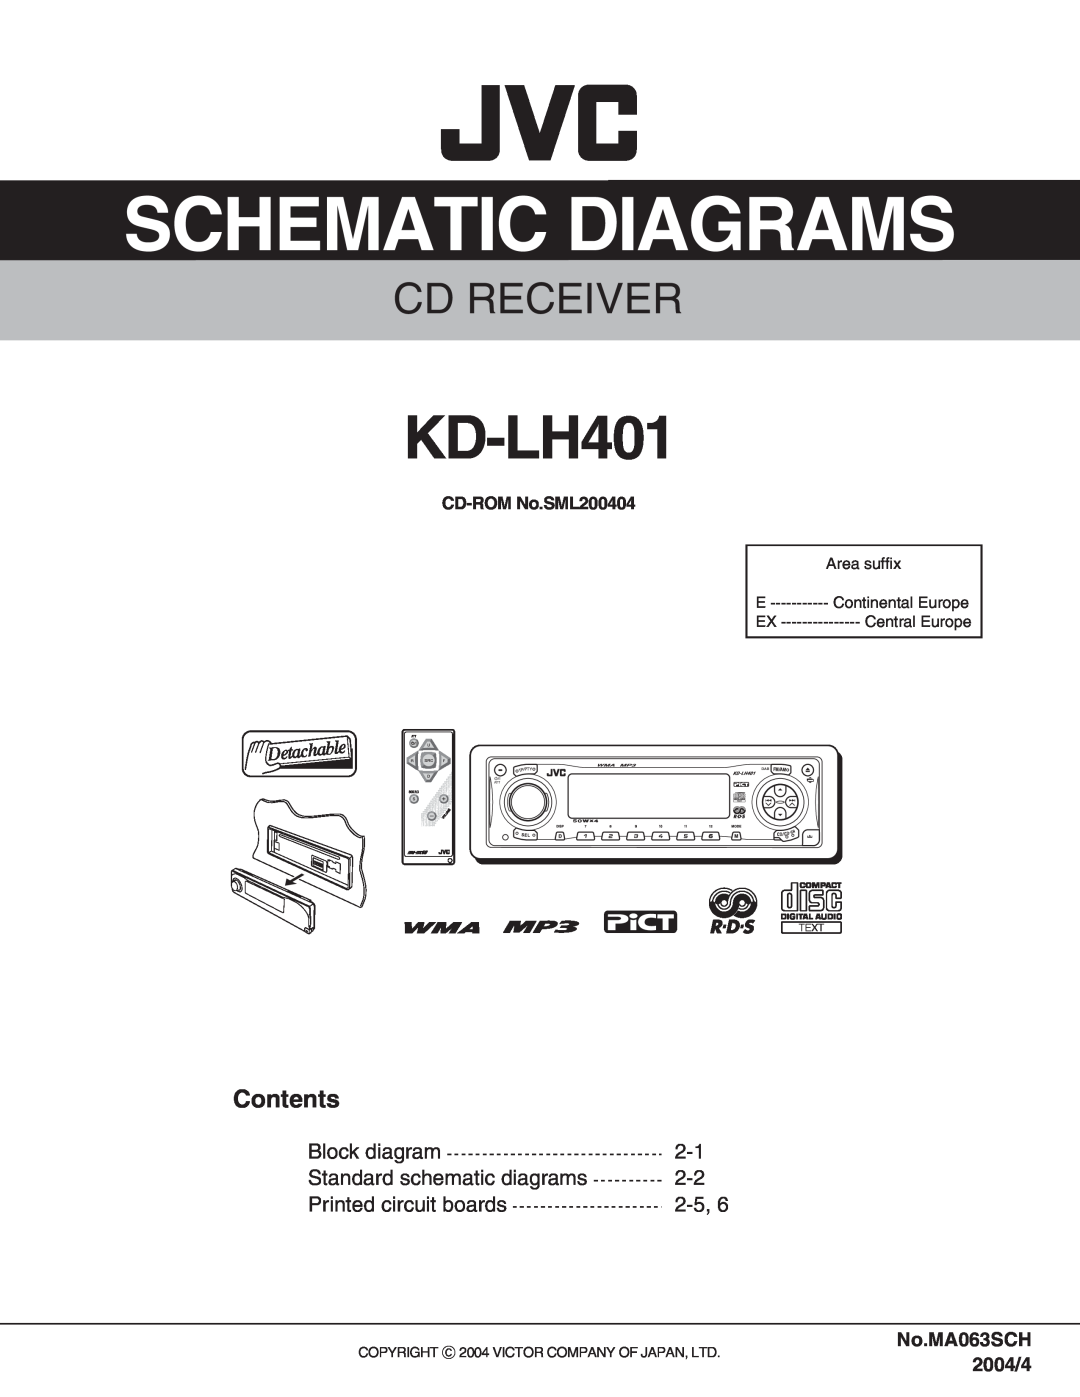 JVC KD-LH401 Contents, Block diagram, Standard schematic diagrams, Printed circuit boards, No.MA063SCH 2004/4, Cd Receiver 